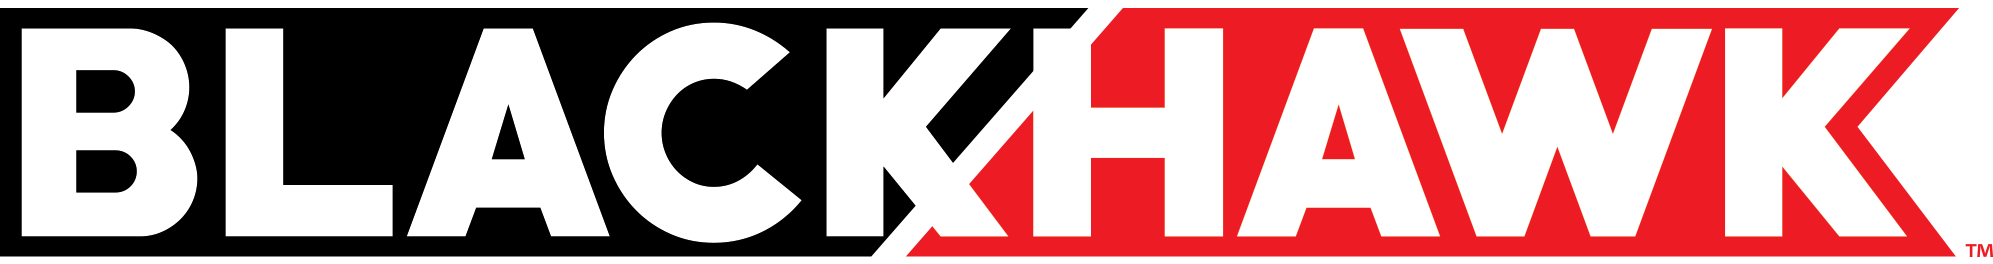 BlackHawk Brand Logo